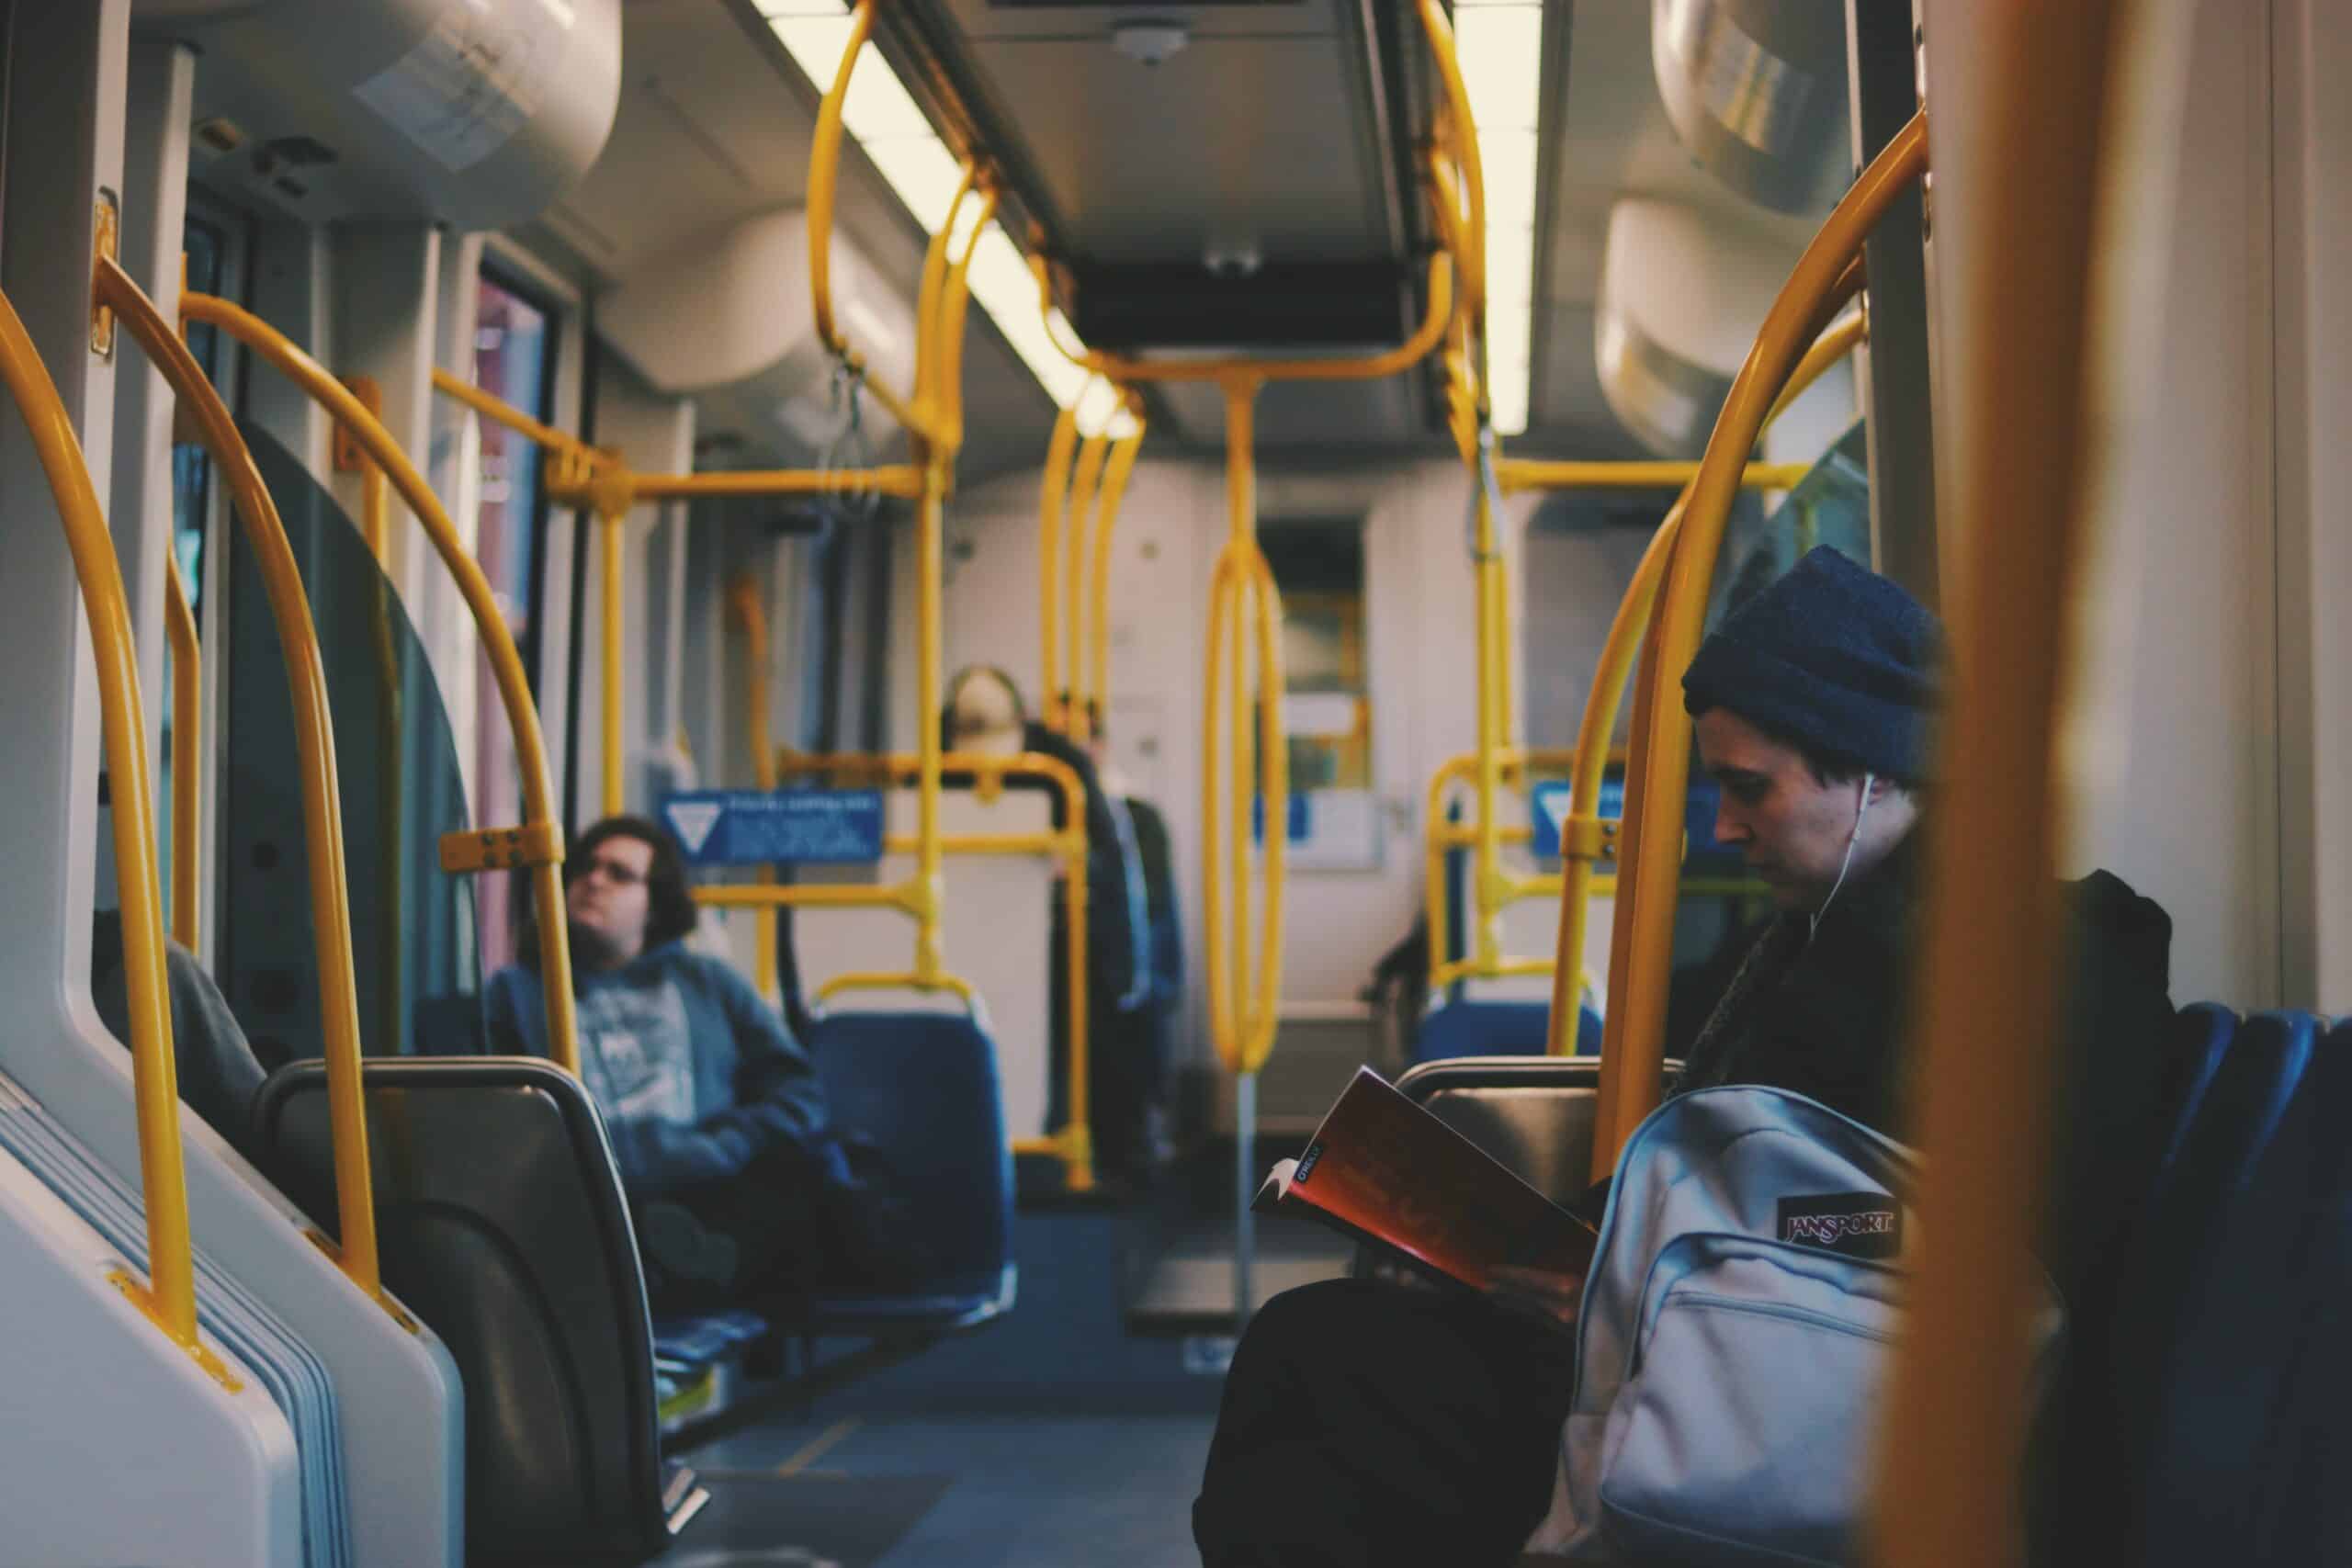 a man reading a book on a public bus